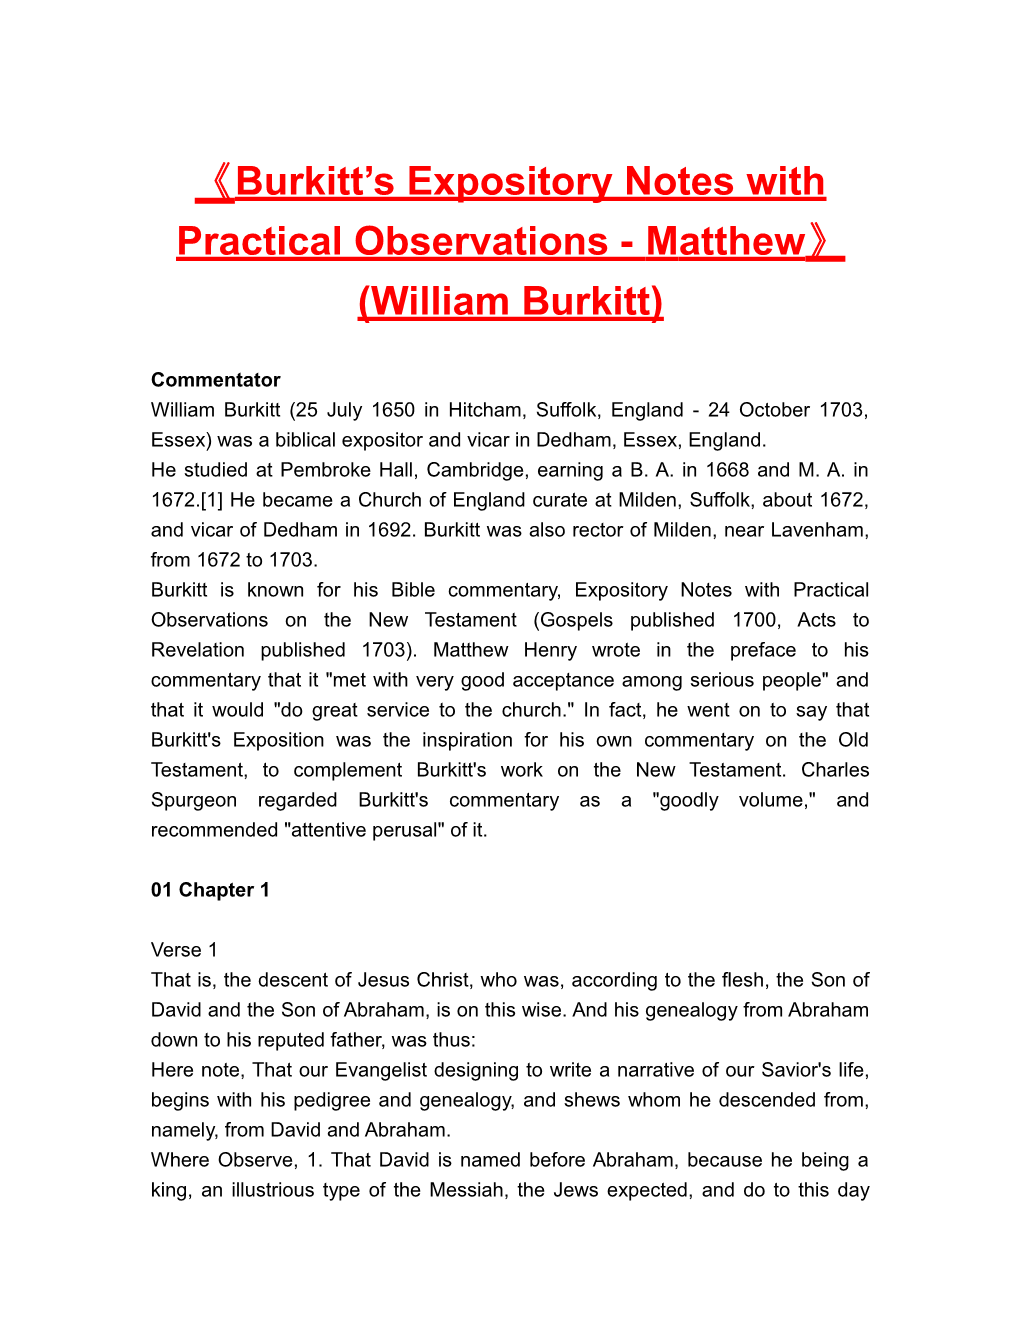 Burkitt S Expository Notes with Practical Observations-Matthew (William Burkitt)